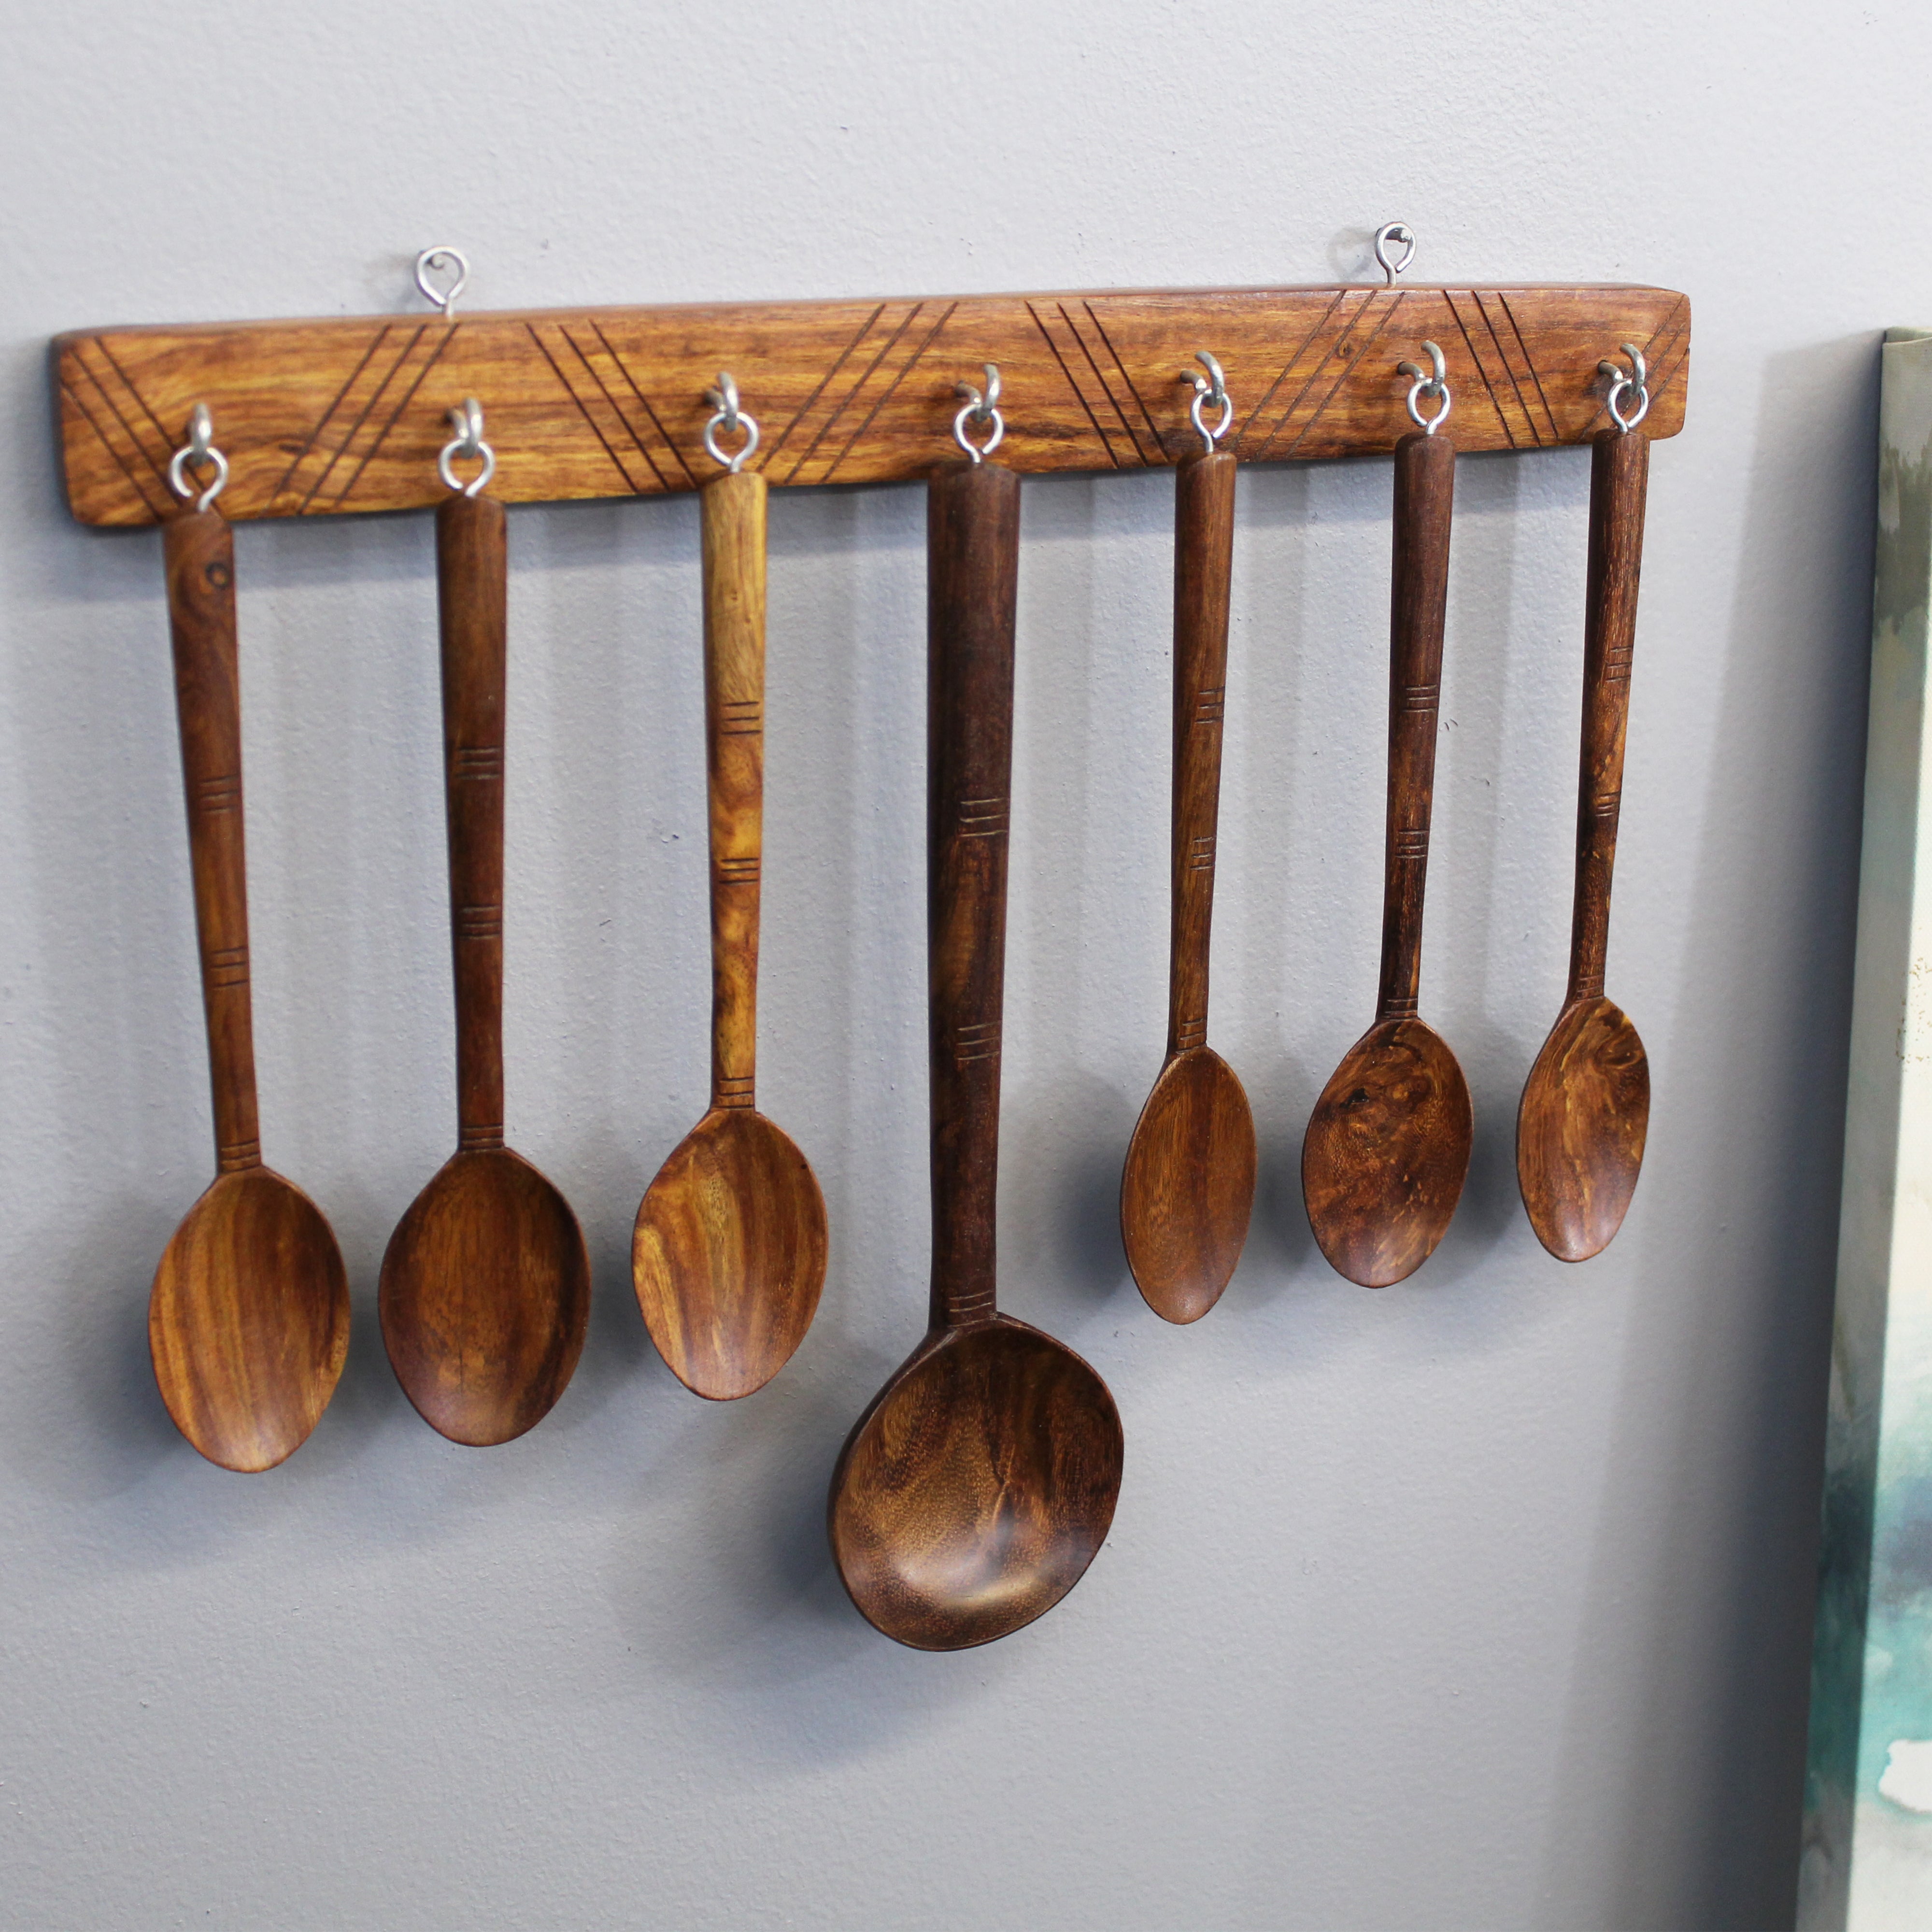 Natural Geo Handcarved Decorative Wooden Kitchen Spoon Set - Brown